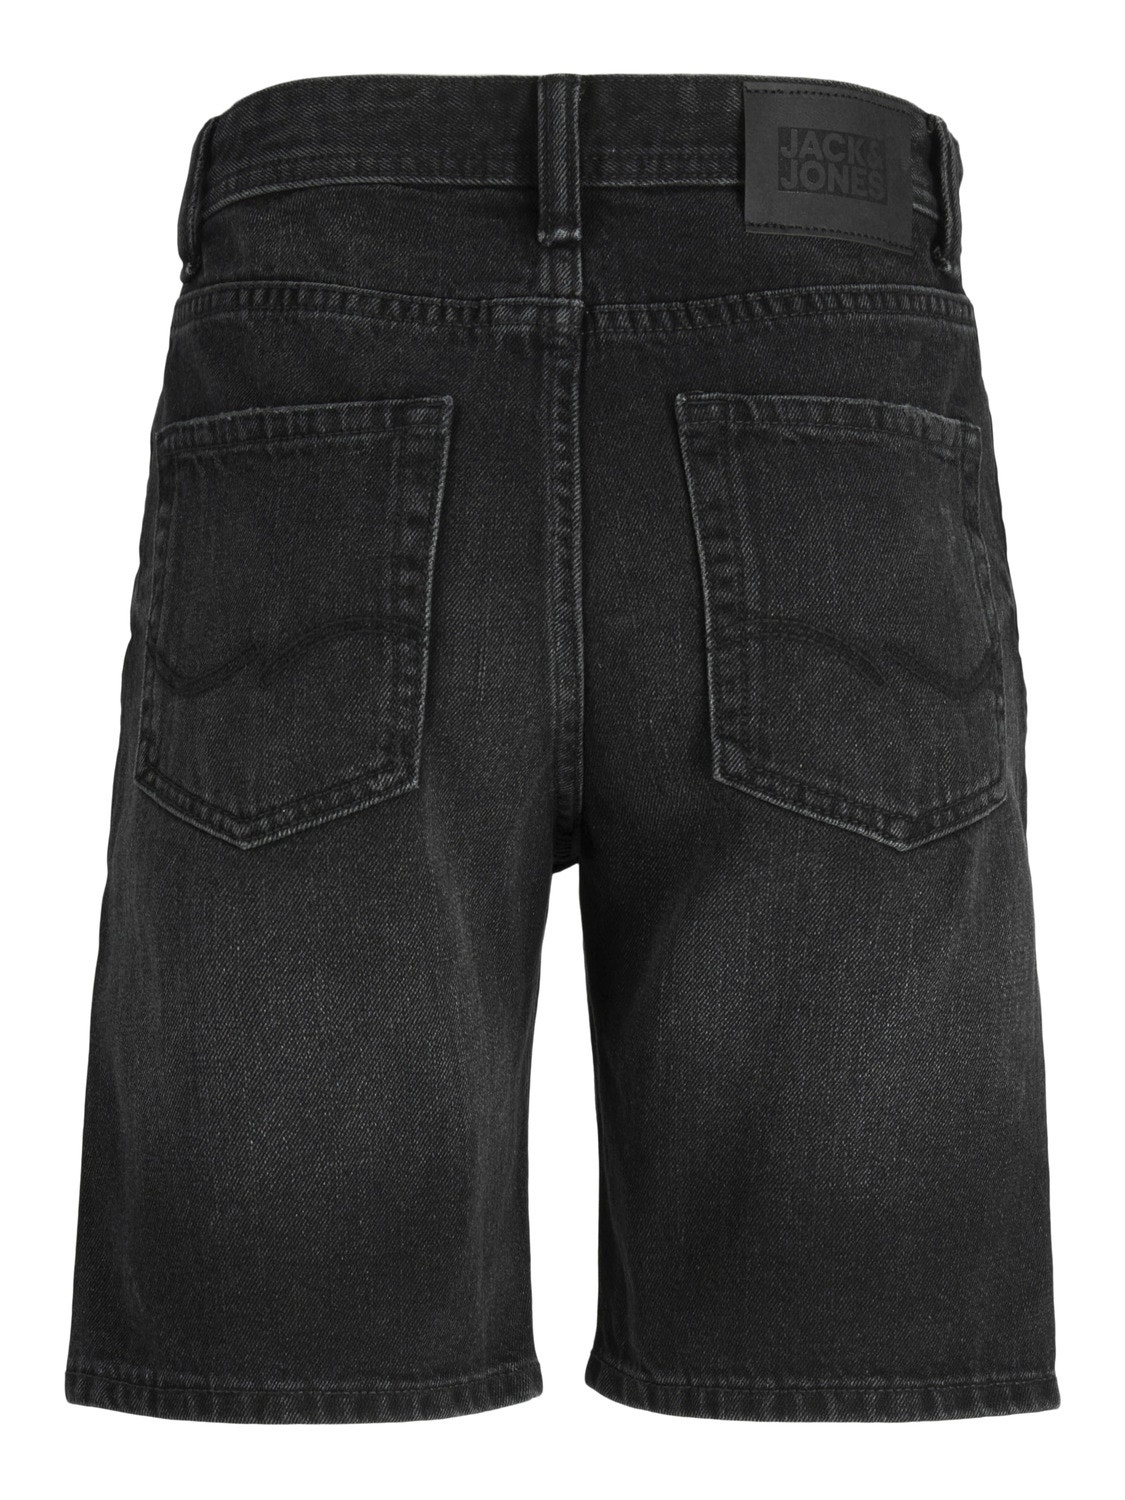 Jack & Jones Relaxed Fit Shorts de ajuste relajado Para chicos -Black Denim - 12249232